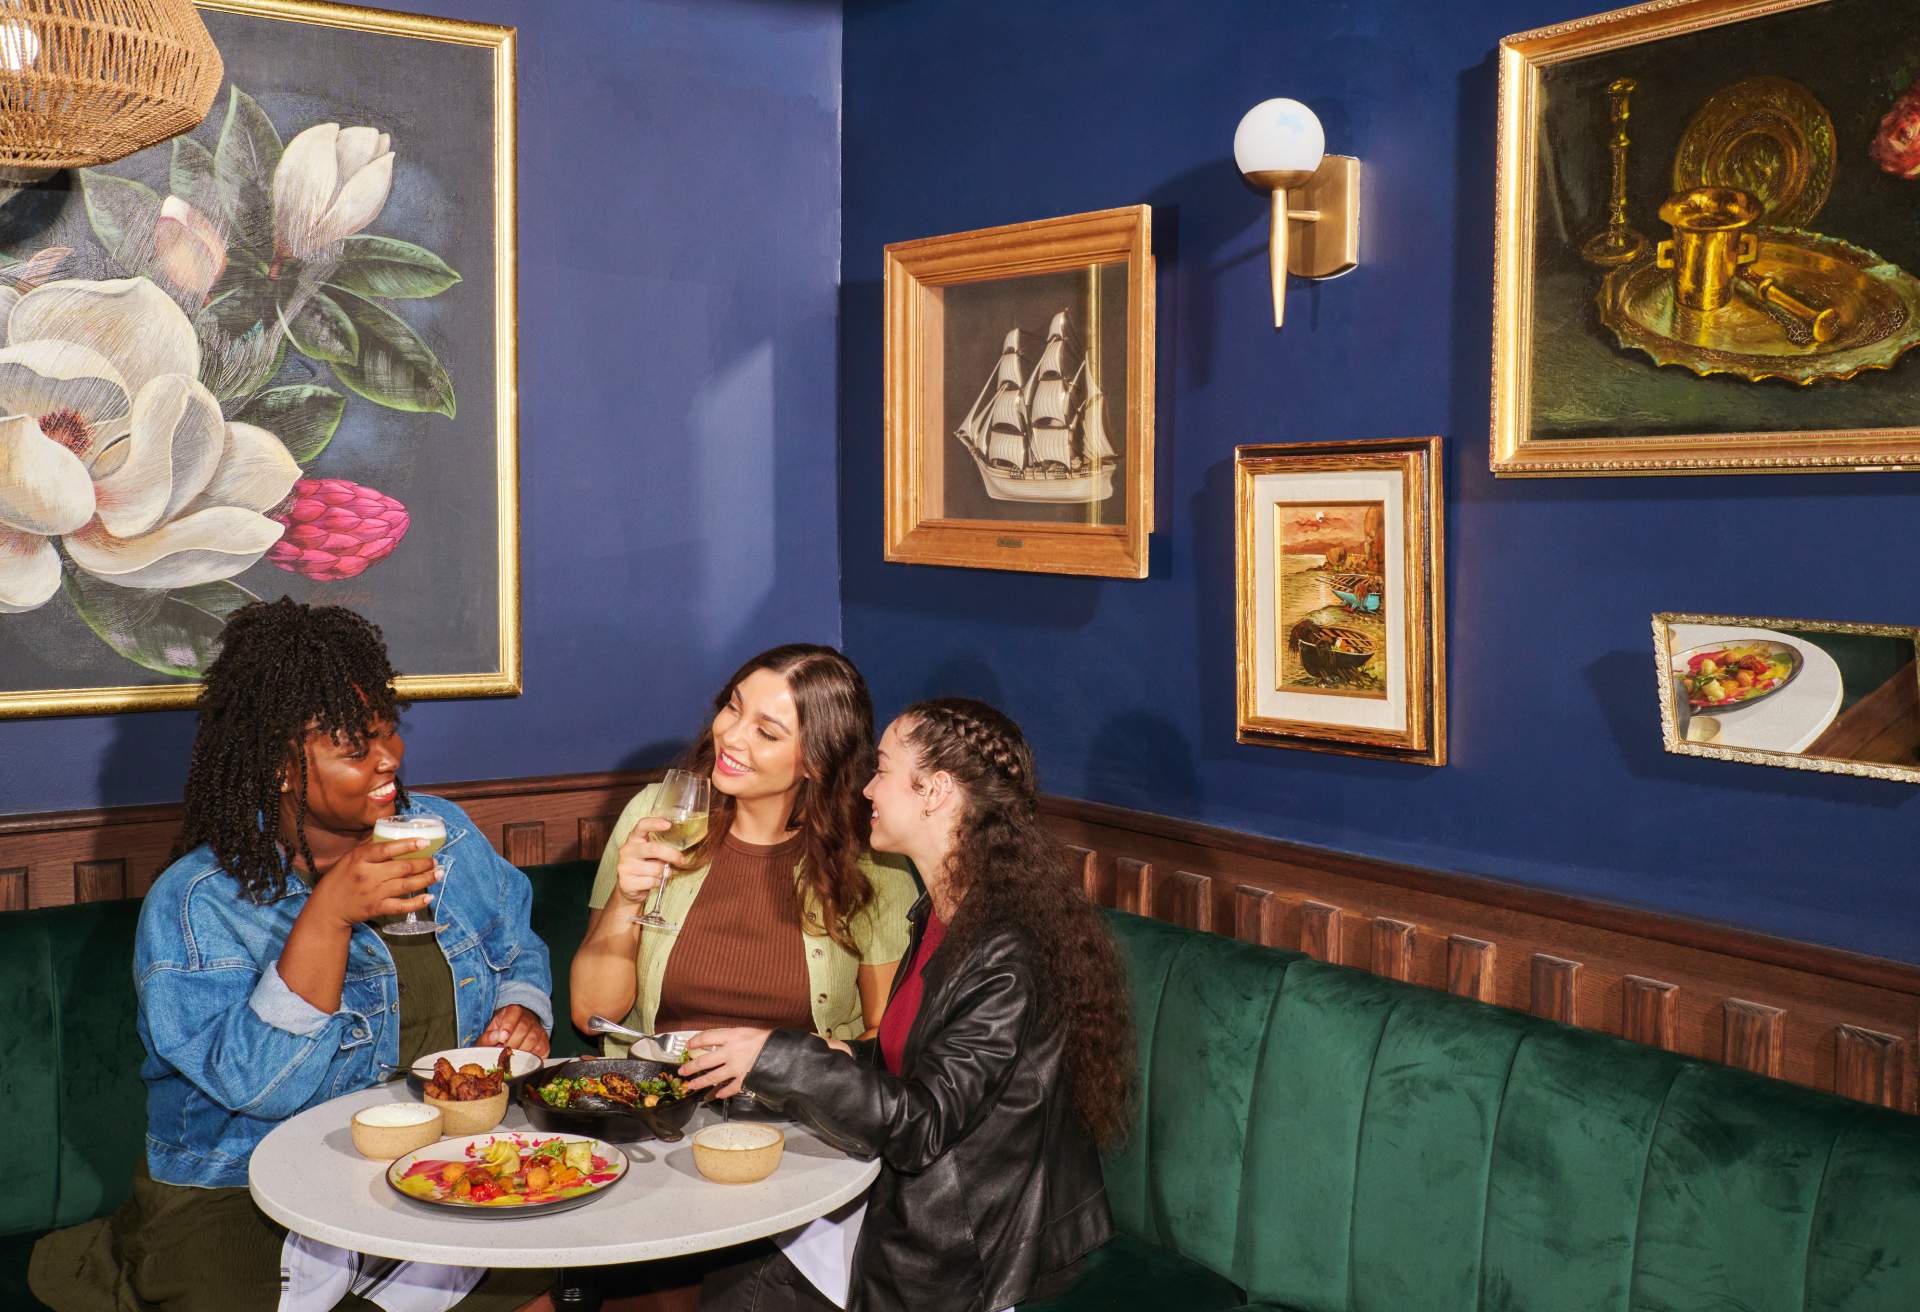 Restaurant branding drew three friends to their favorite spot to enjoy a night out